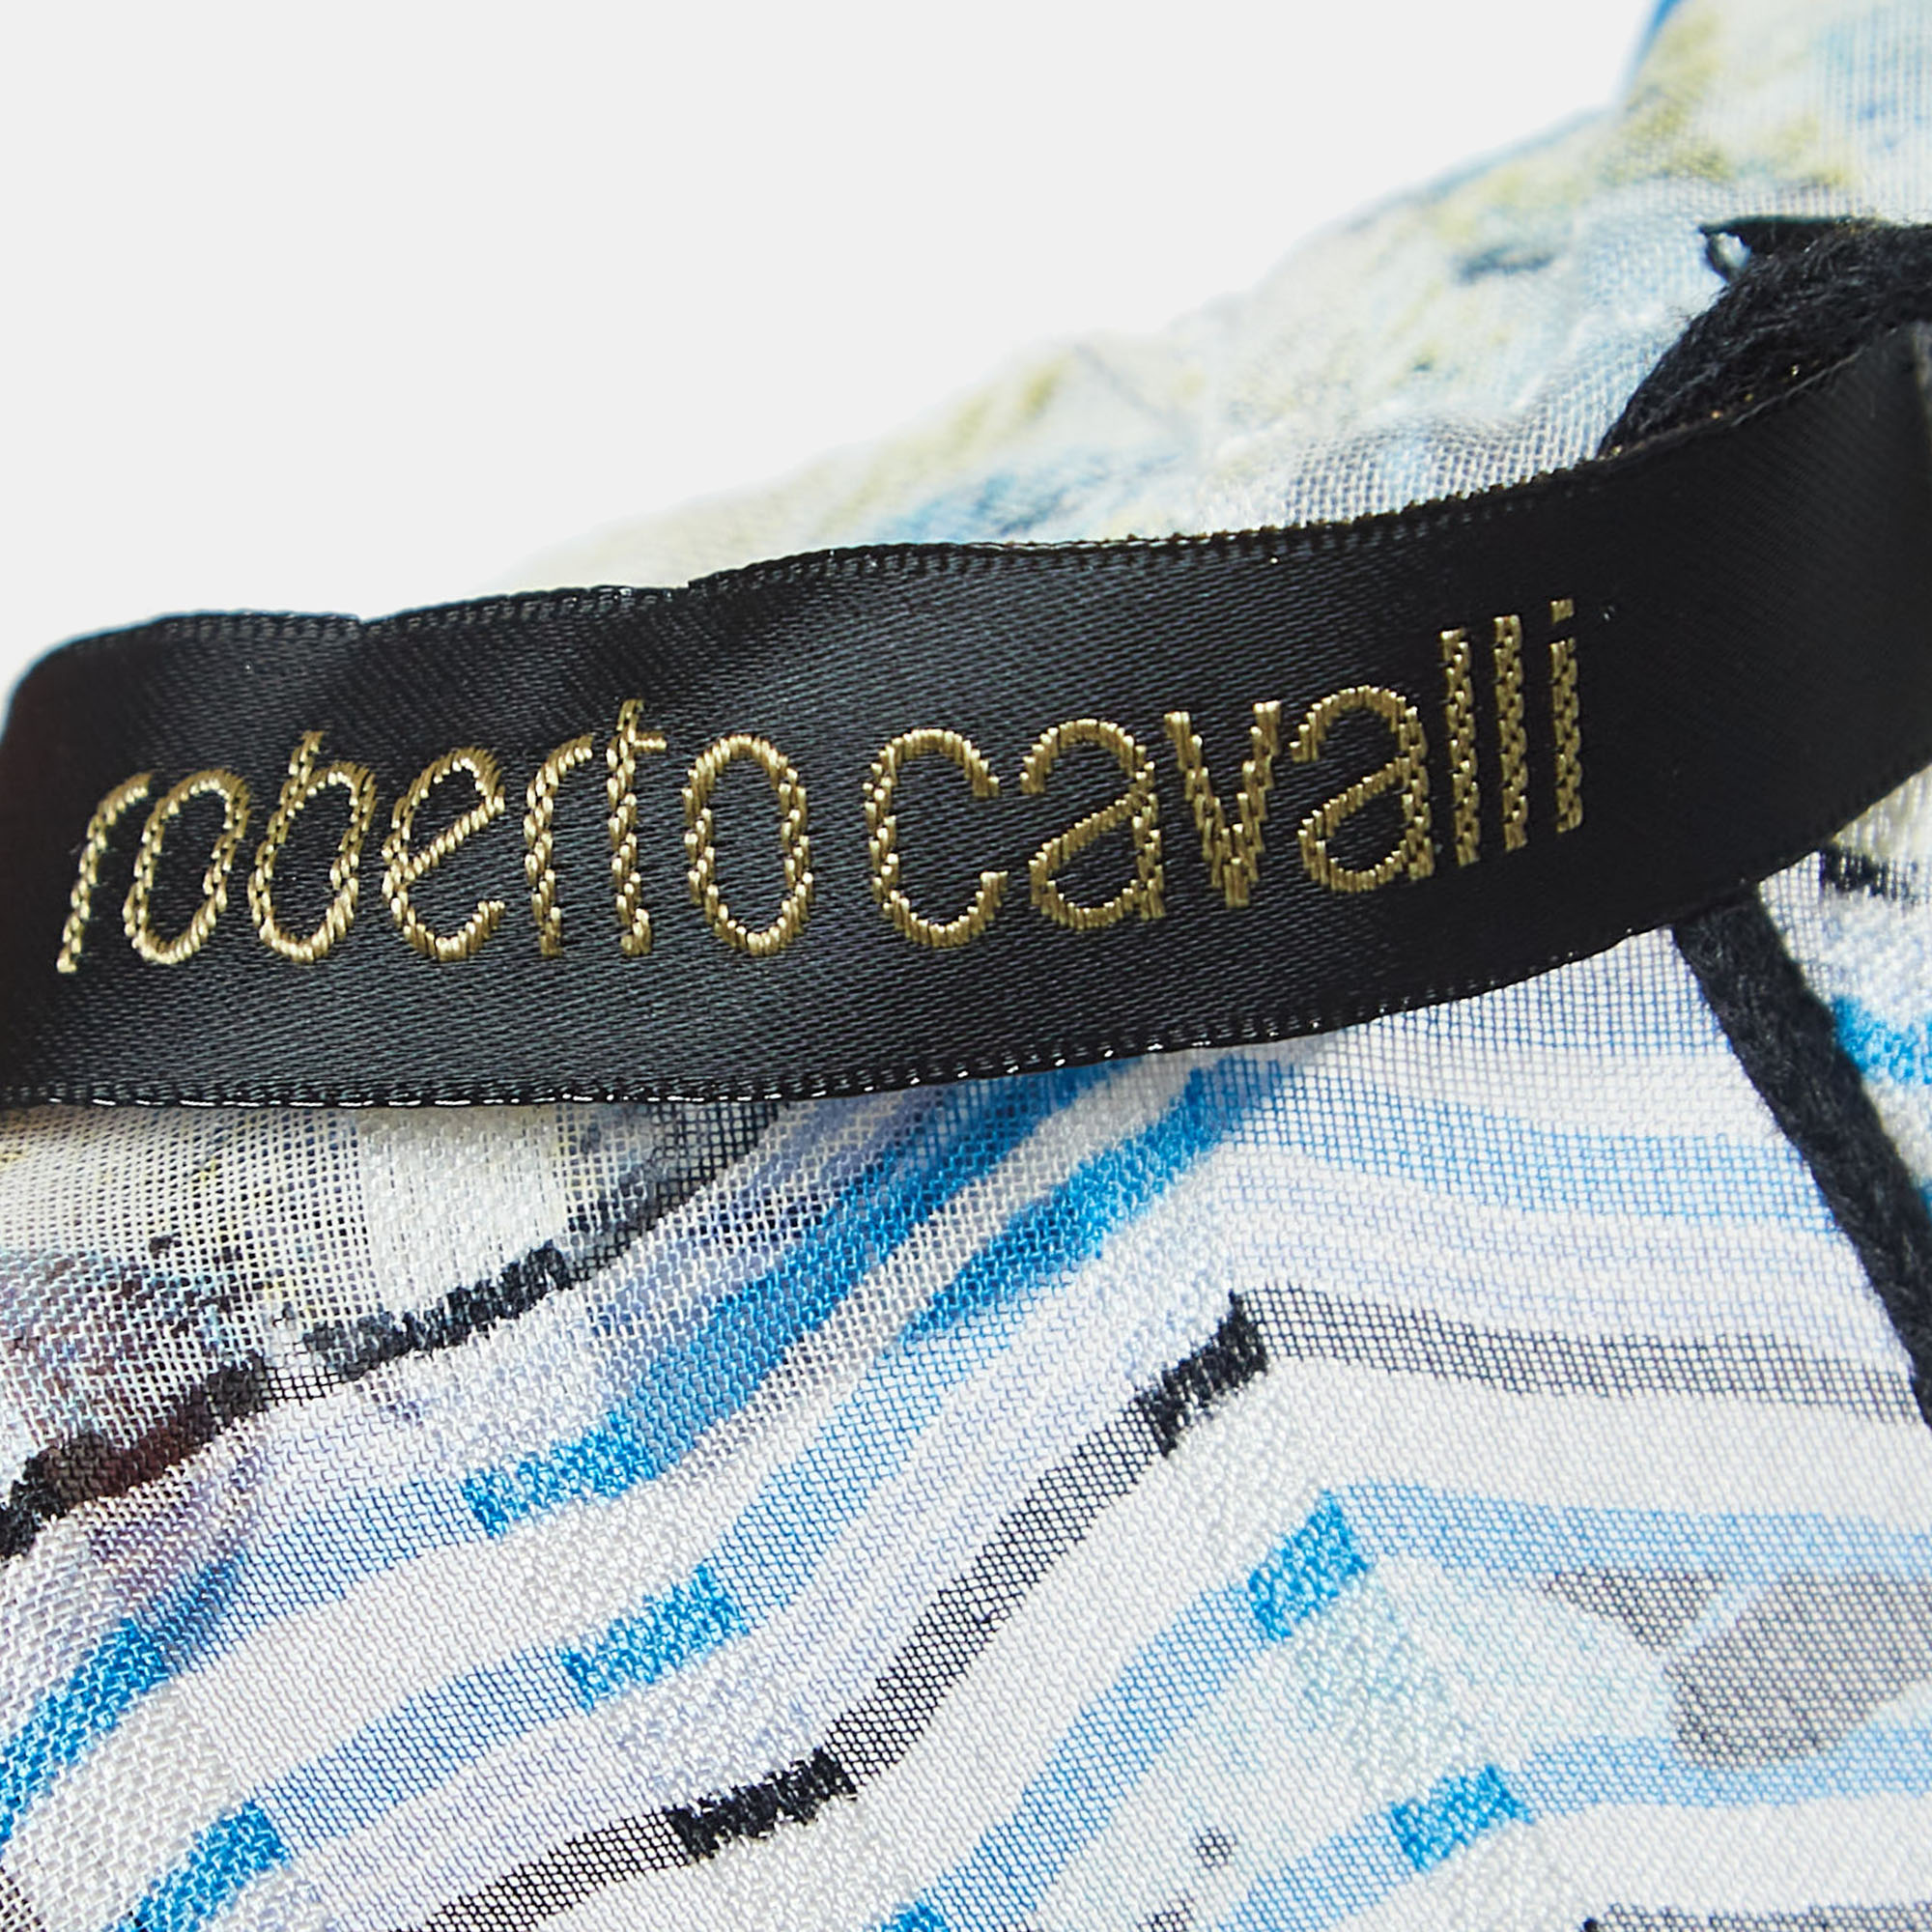 Roberto Cavalli Multicolor Print Silk Top Skirt Set S